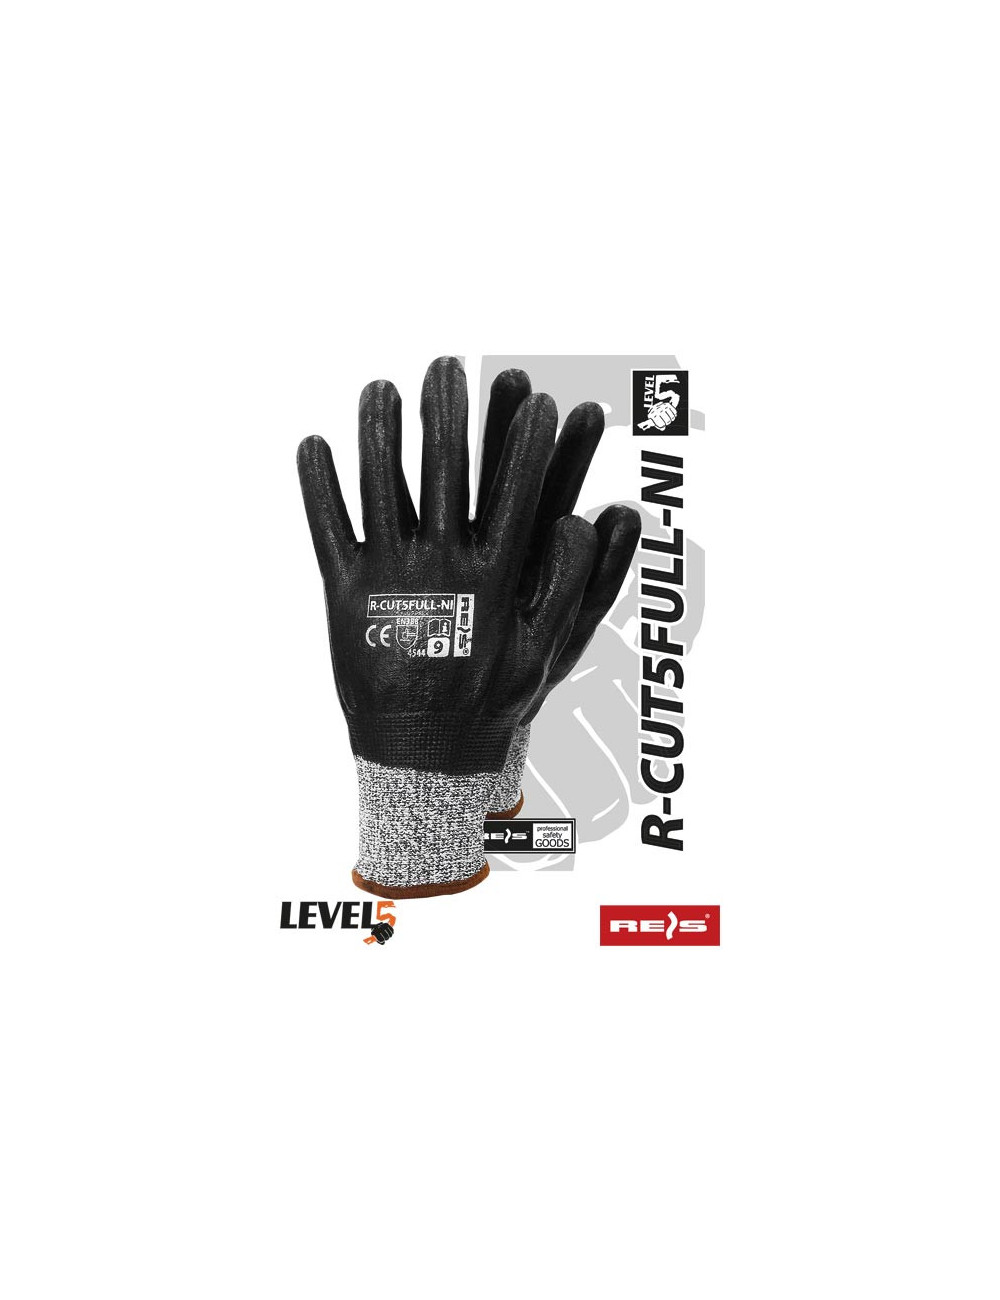 Protective gloves r-cut5full-ni bwb black-white-black Reis